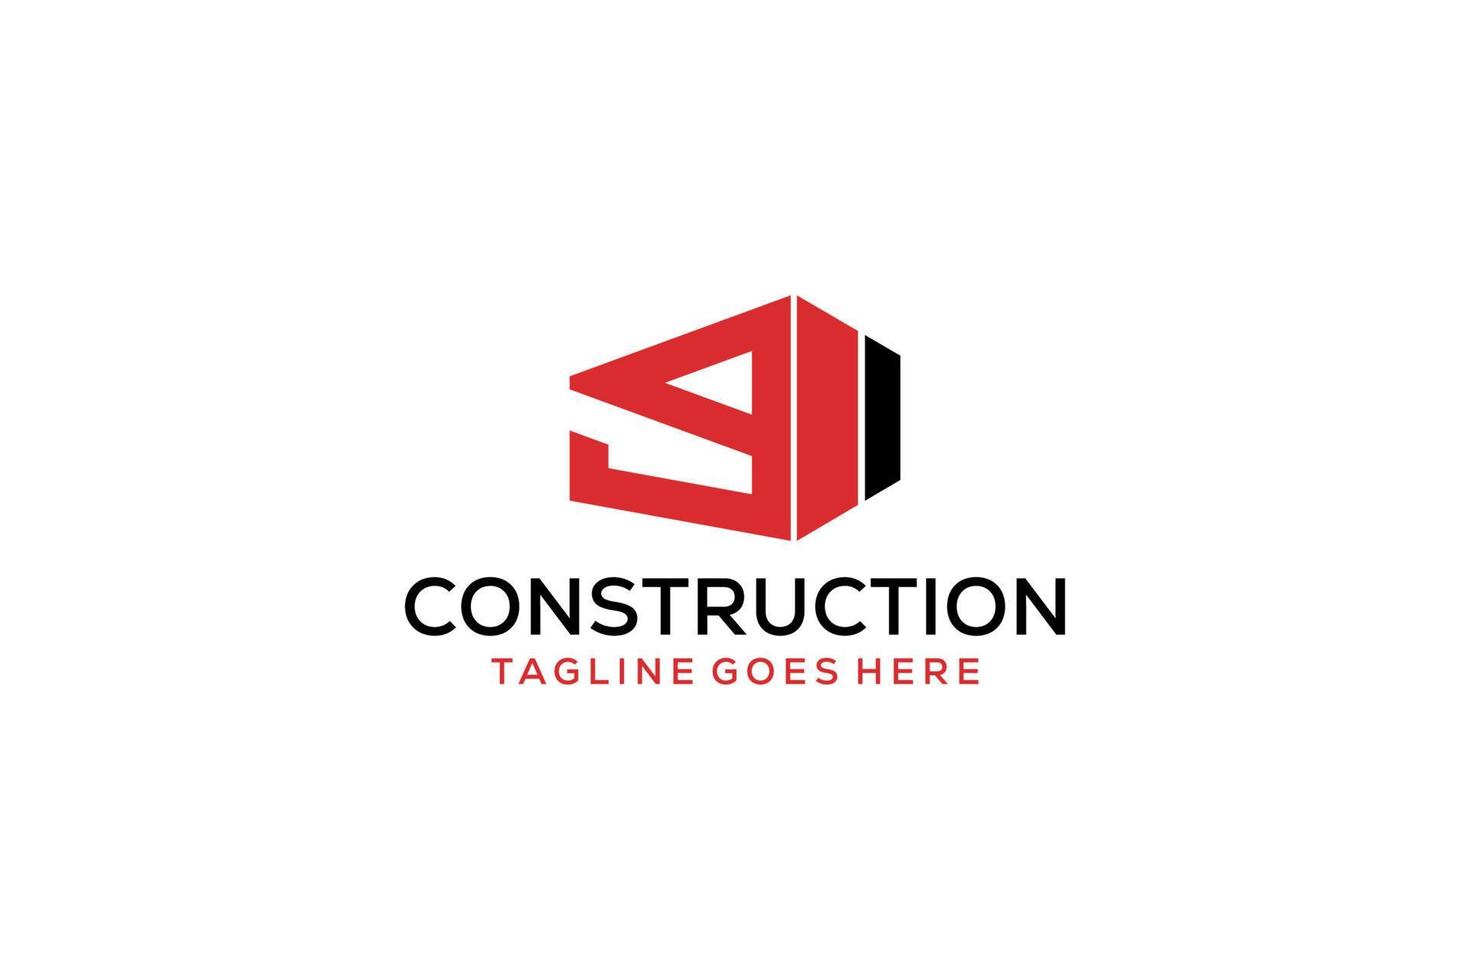 Letter E for Real Estate Remodeling Logo. Construction Architecture Building Logo Design Template Element. vector